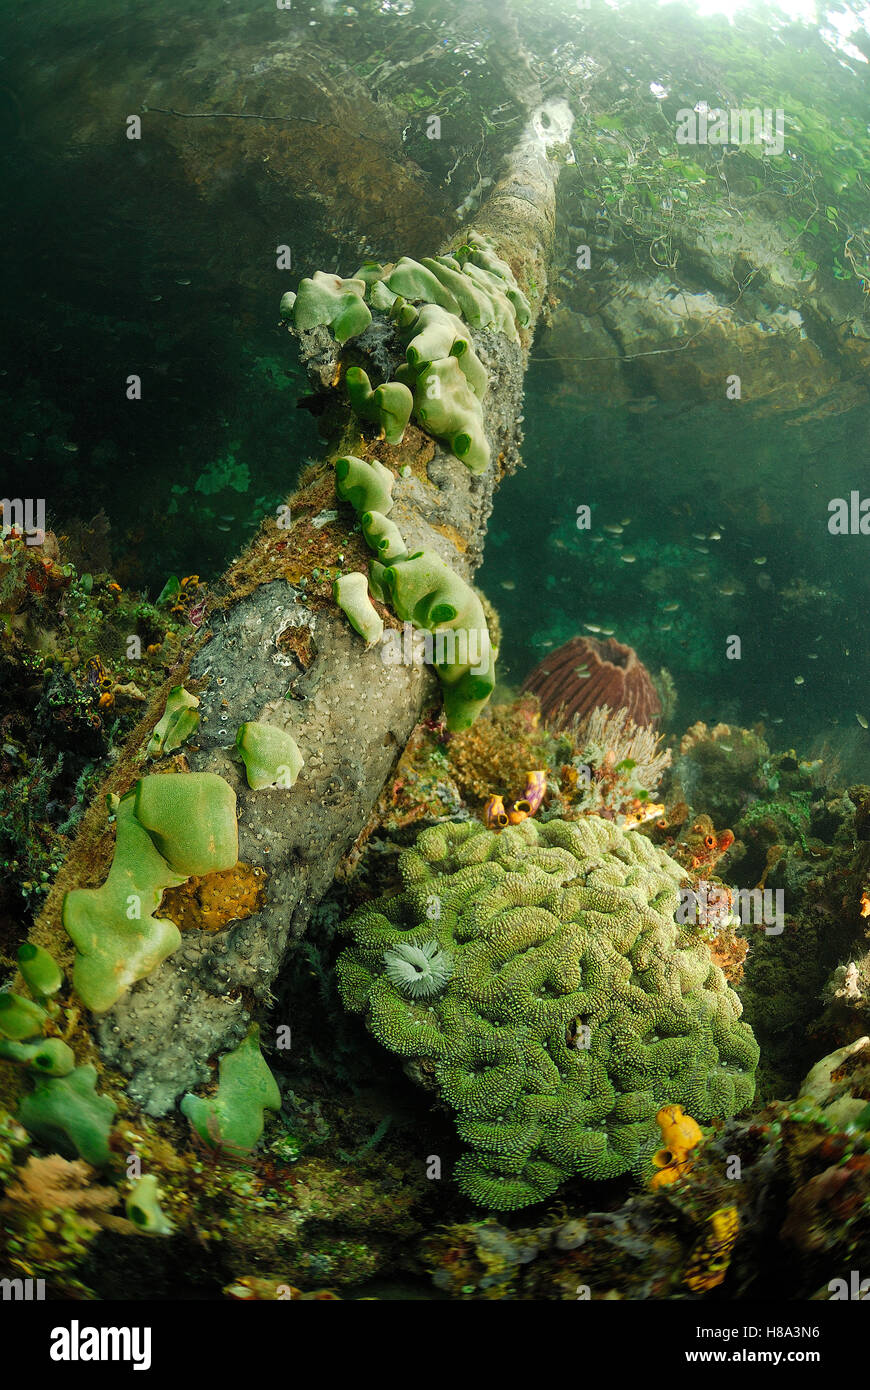 Invertebrates covering fallen tree in coral reef, Indonesia Stock Photo